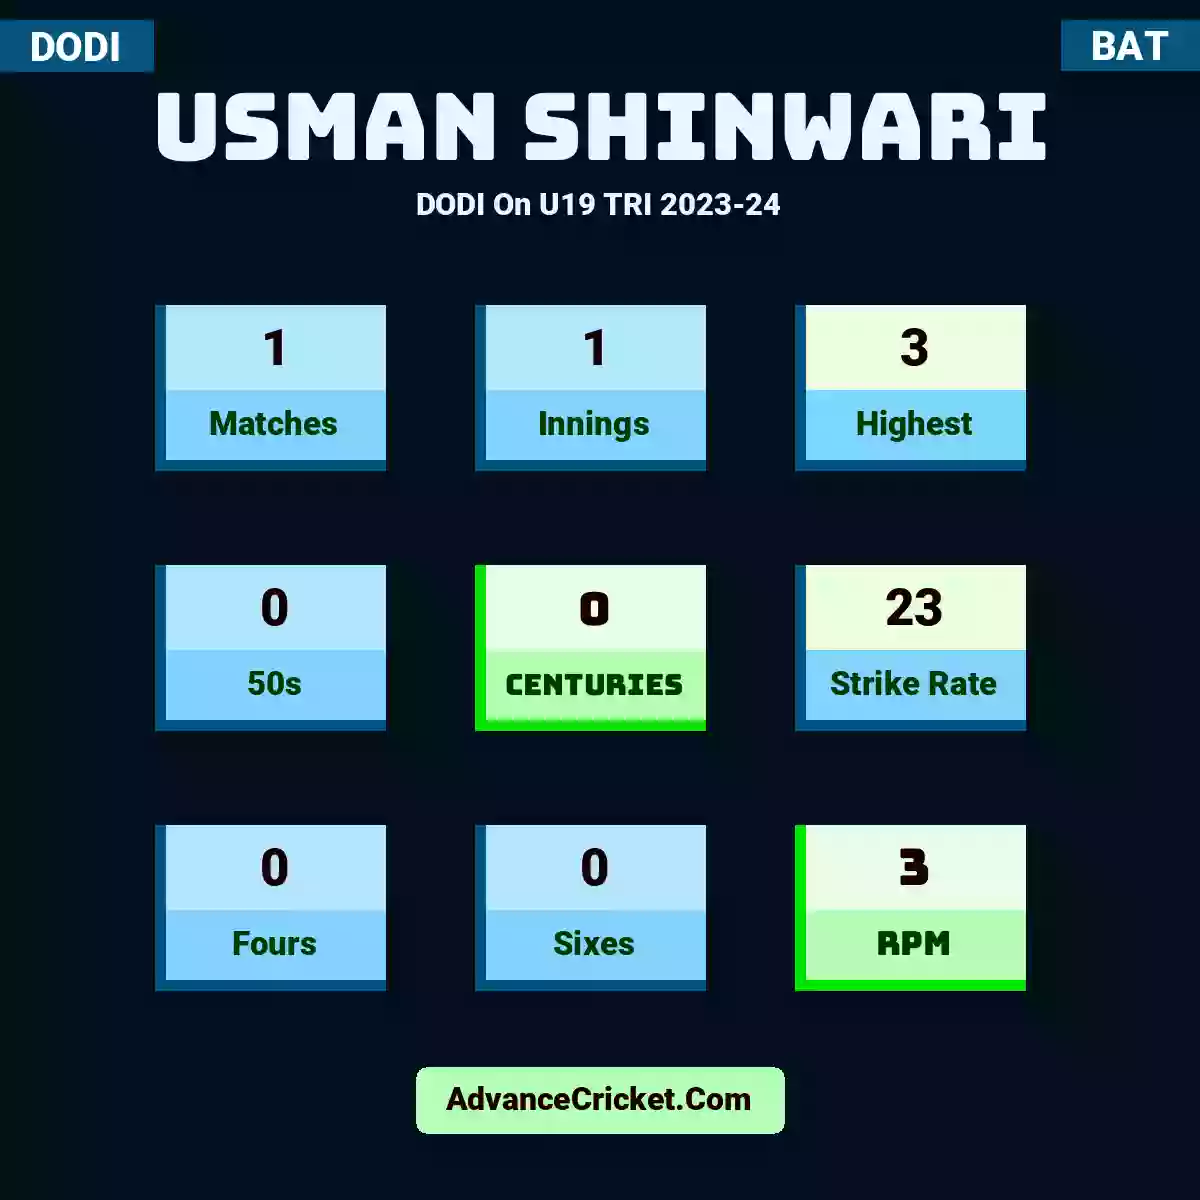 Usman Shinwari DODI  On U19 TRI 2023-24, Usman Shinwari played 1 matches, scored 3 runs as highest, 0 half-centuries, and 0 centuries, with a strike rate of 23. U.Shinwari hit 0 fours and 0 sixes, with an RPM of 3.